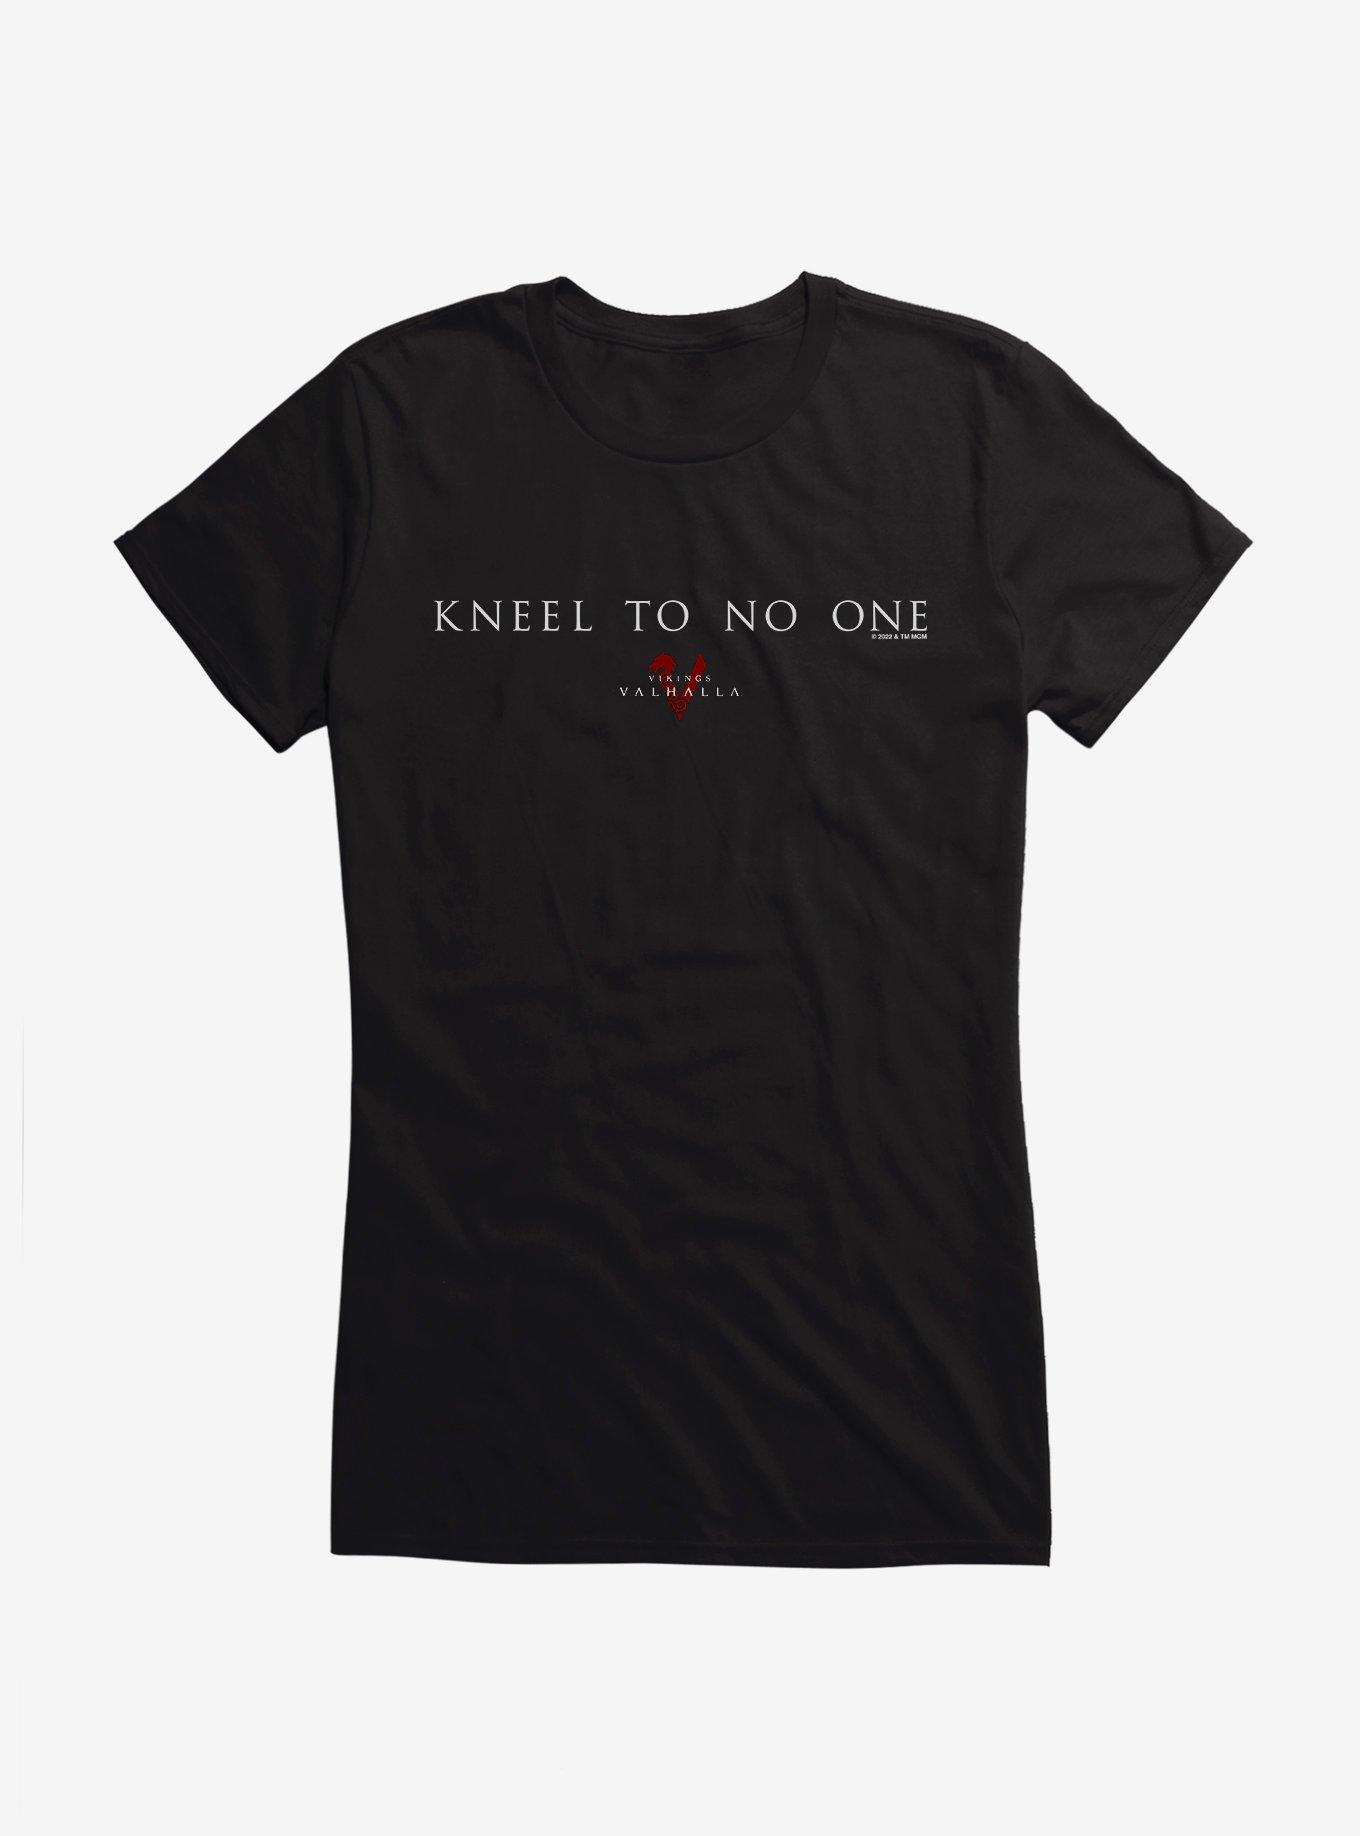 Vikings: Valhalla Kneel To No One Girls T-Shirt